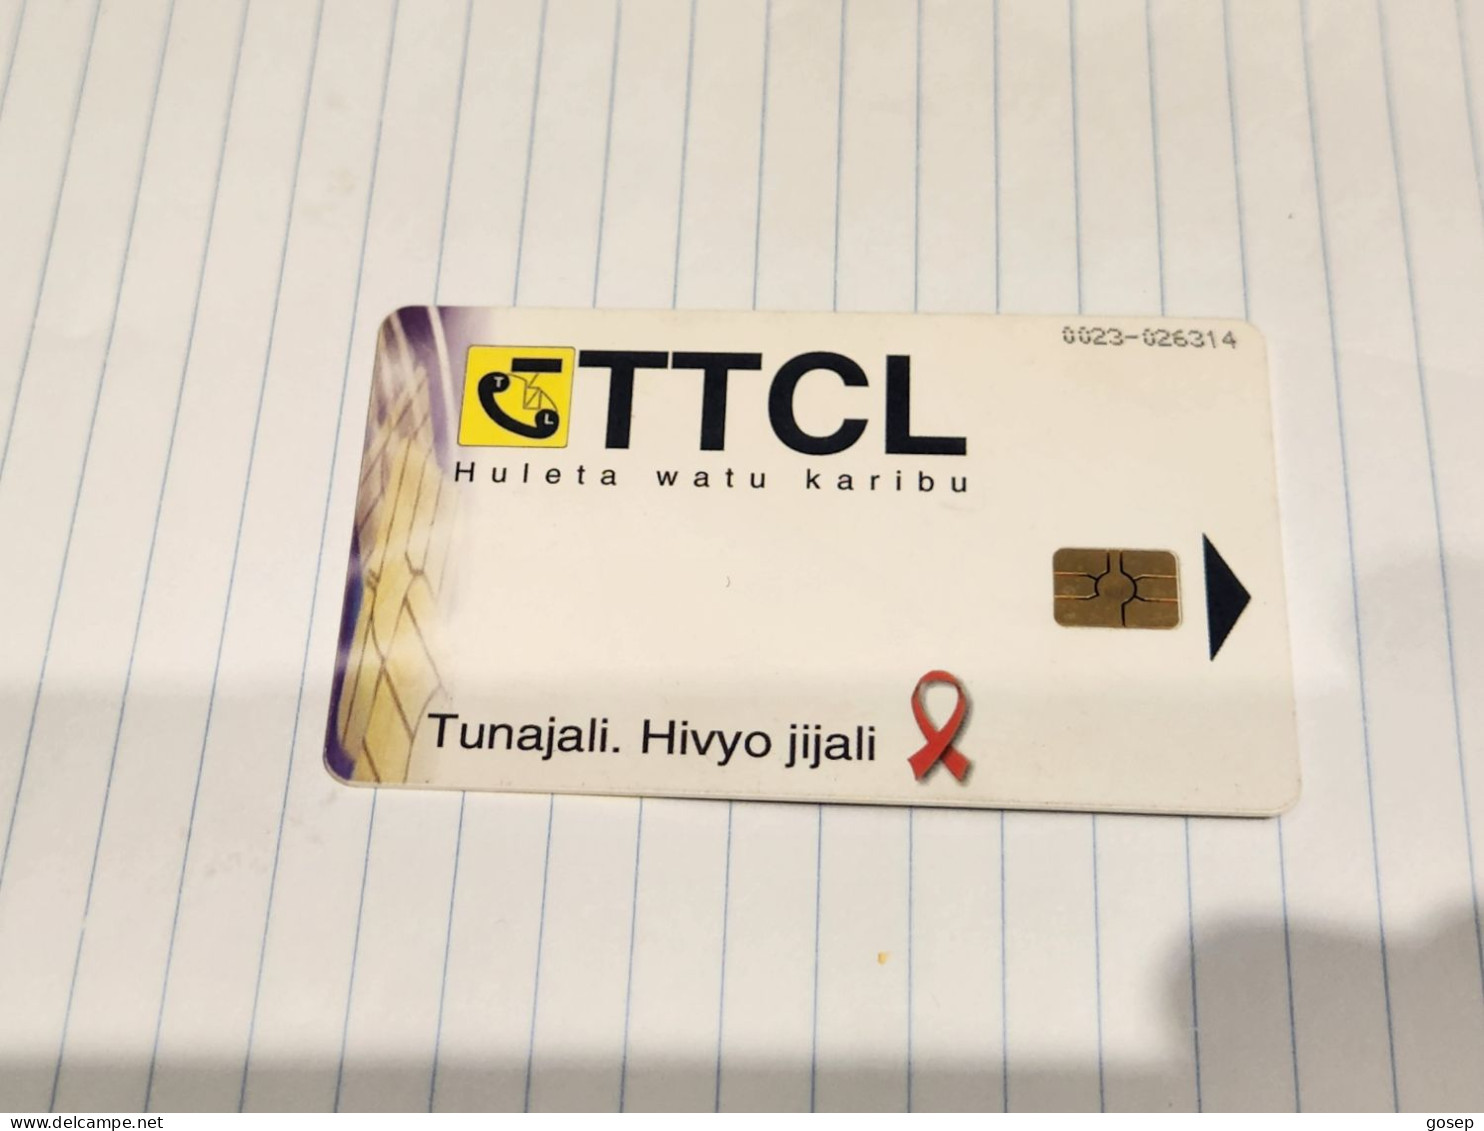 Tanzania-(TZ-TTC-0018B1)-sungura Mjanja-(20)-(Tshs-1.000)-(0023-026314)-used Card+1card Prepiad/gift Free - Tanzania